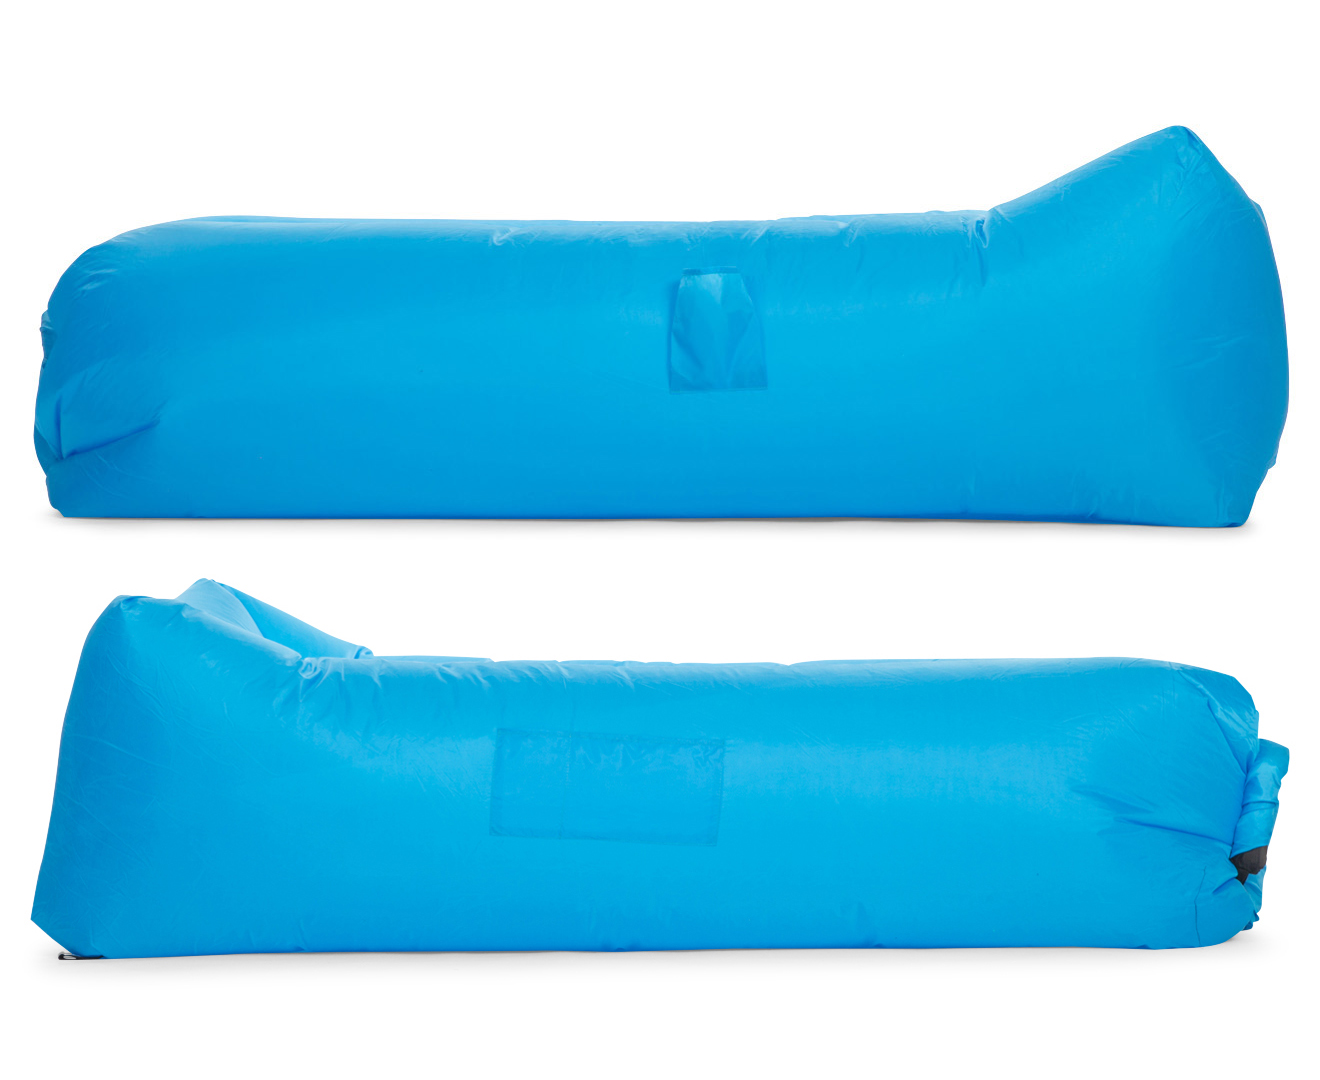 Inflatable Beach Air Bed - Blue | Catch.com.au